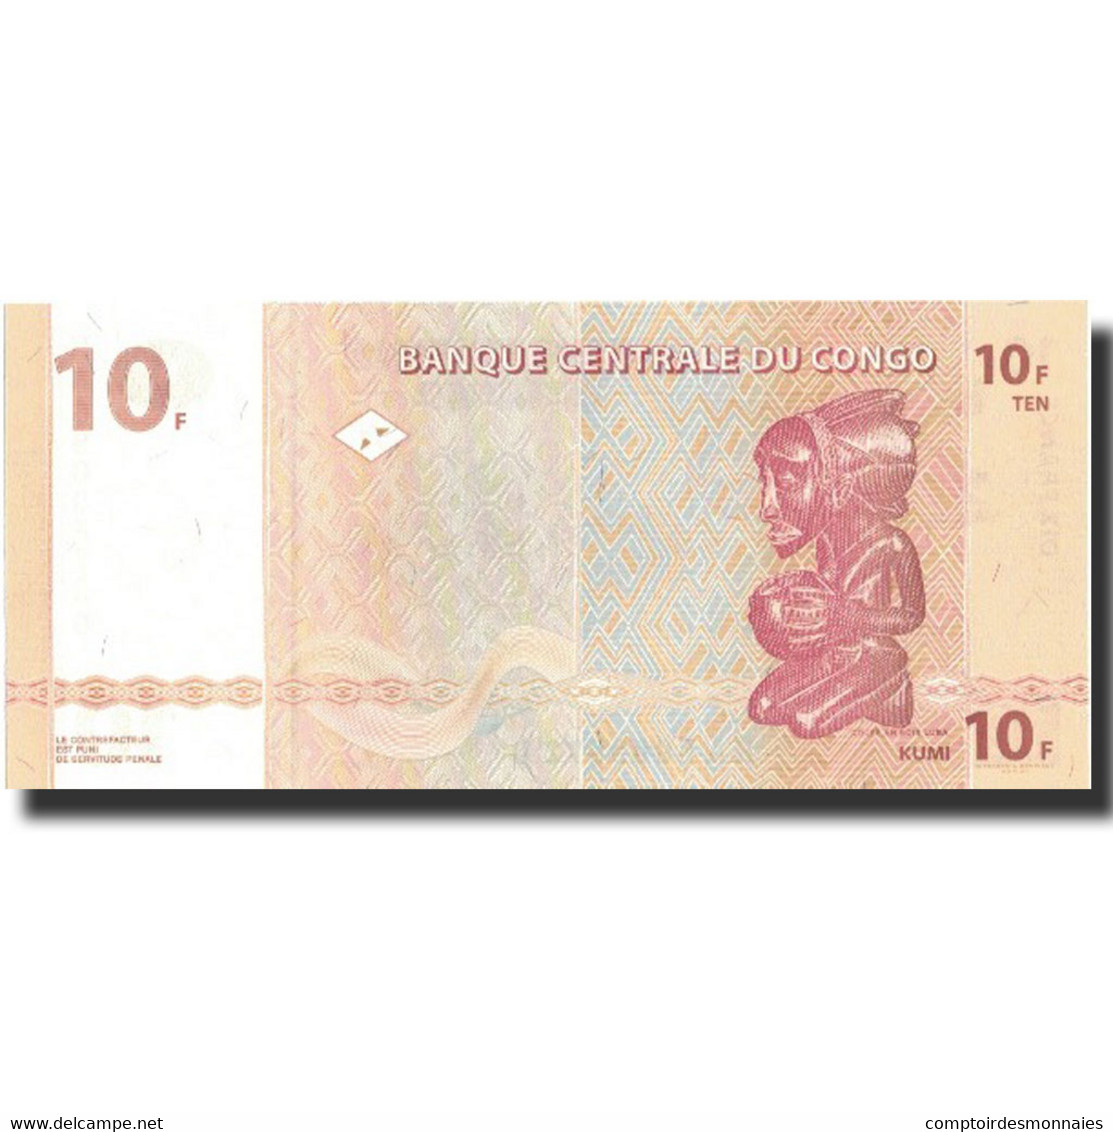 Billet, Congo Democratic Republic, 10 Francs, 2003, 2003-06-30, KM:93a, NEUF - Republic Of Congo (Congo-Brazzaville)